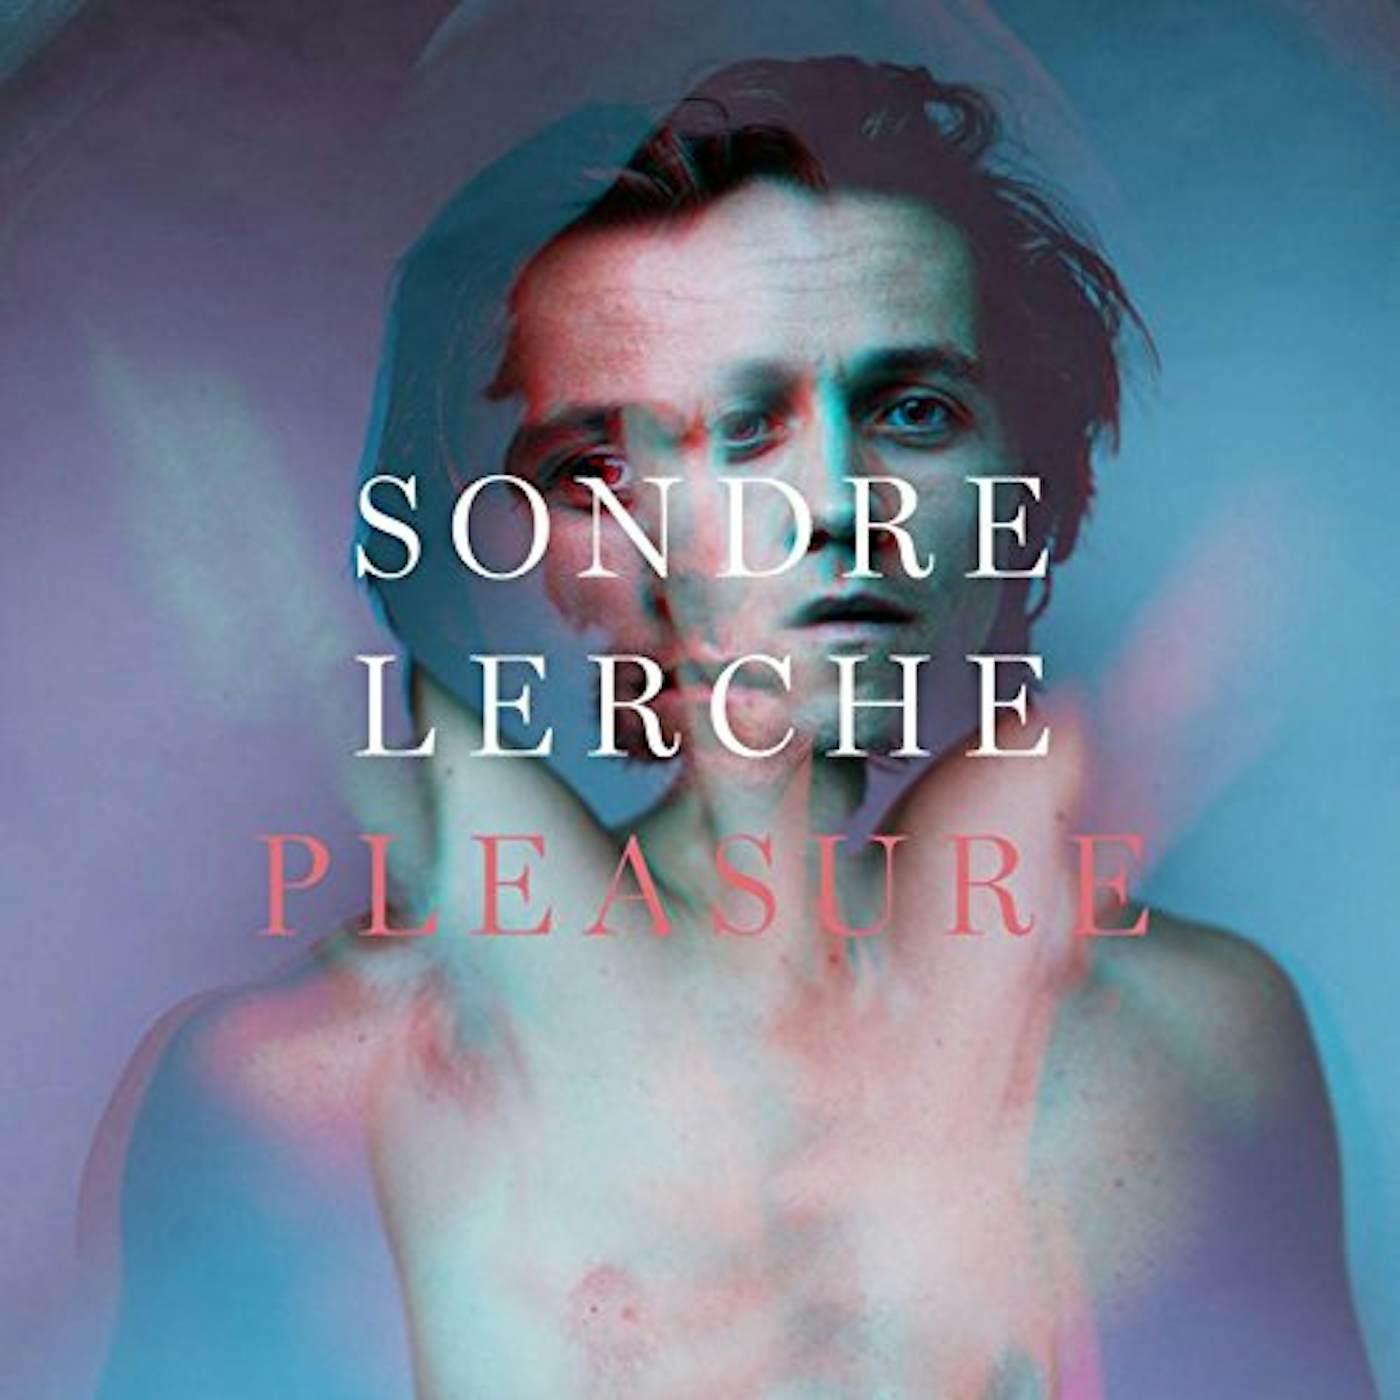 Sondre Lerche Pleasure Vinyl Record